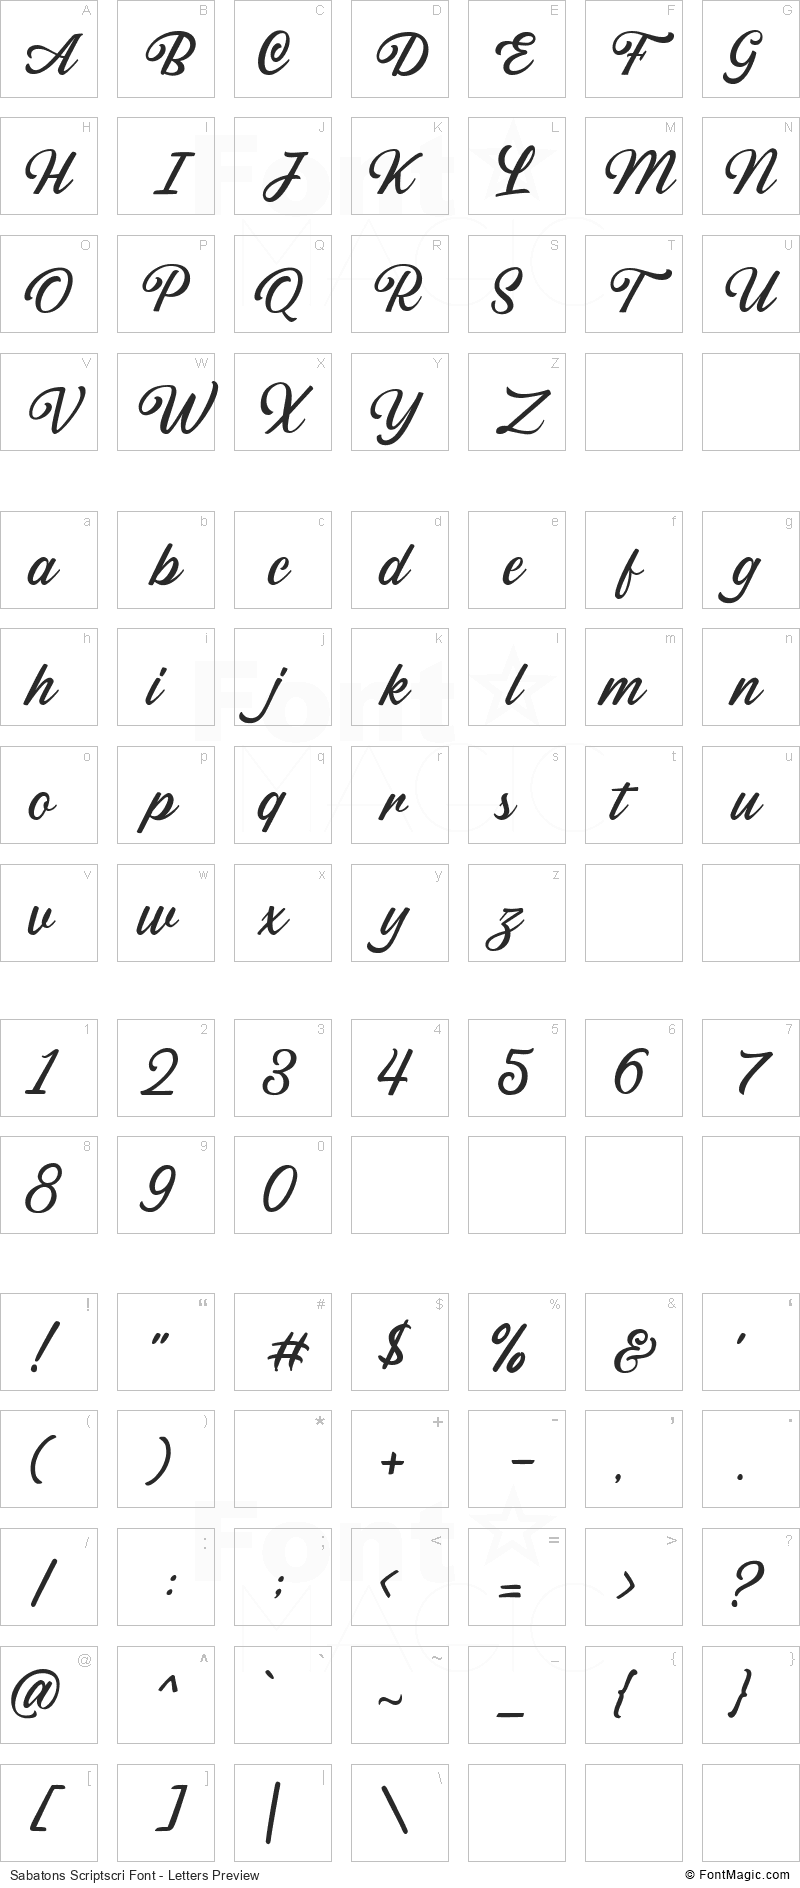 Sabatons Scriptscri Font - All Latters Preview Chart